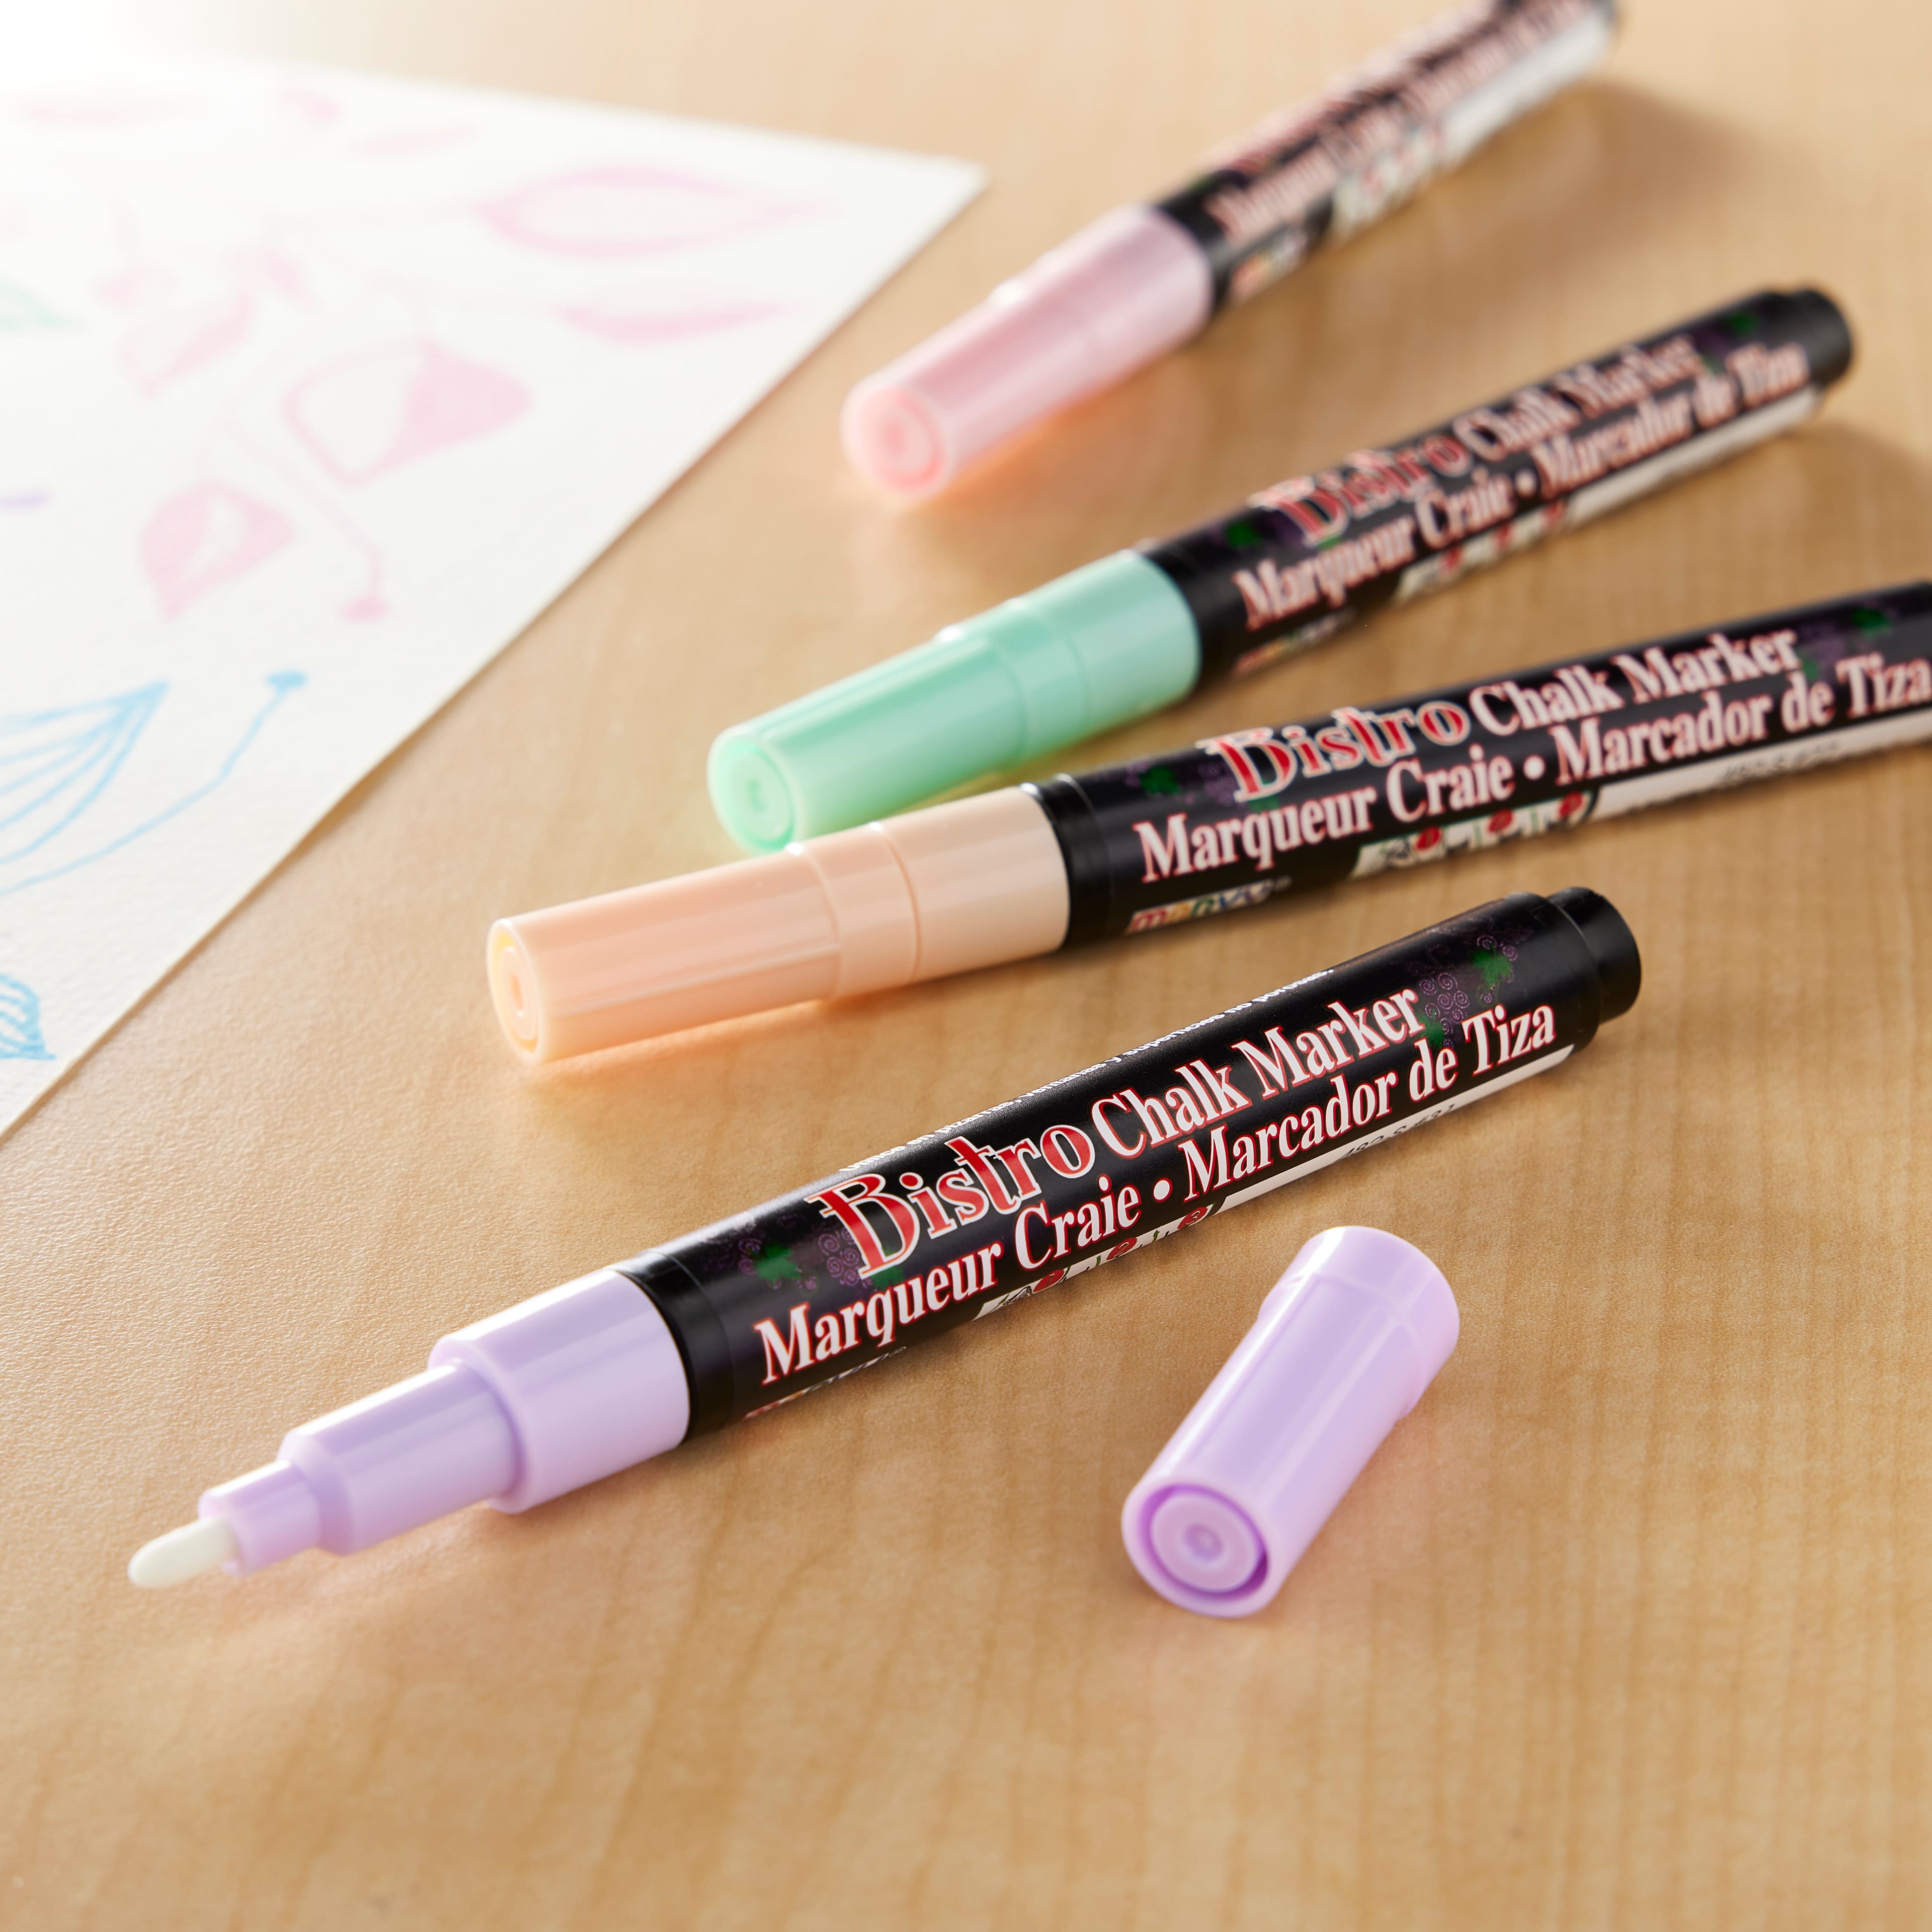 6 Packs: 4 ct. (24 total) Marvy&#xAE; Uchida Bistro Fine Point Pastel Chalk Markers